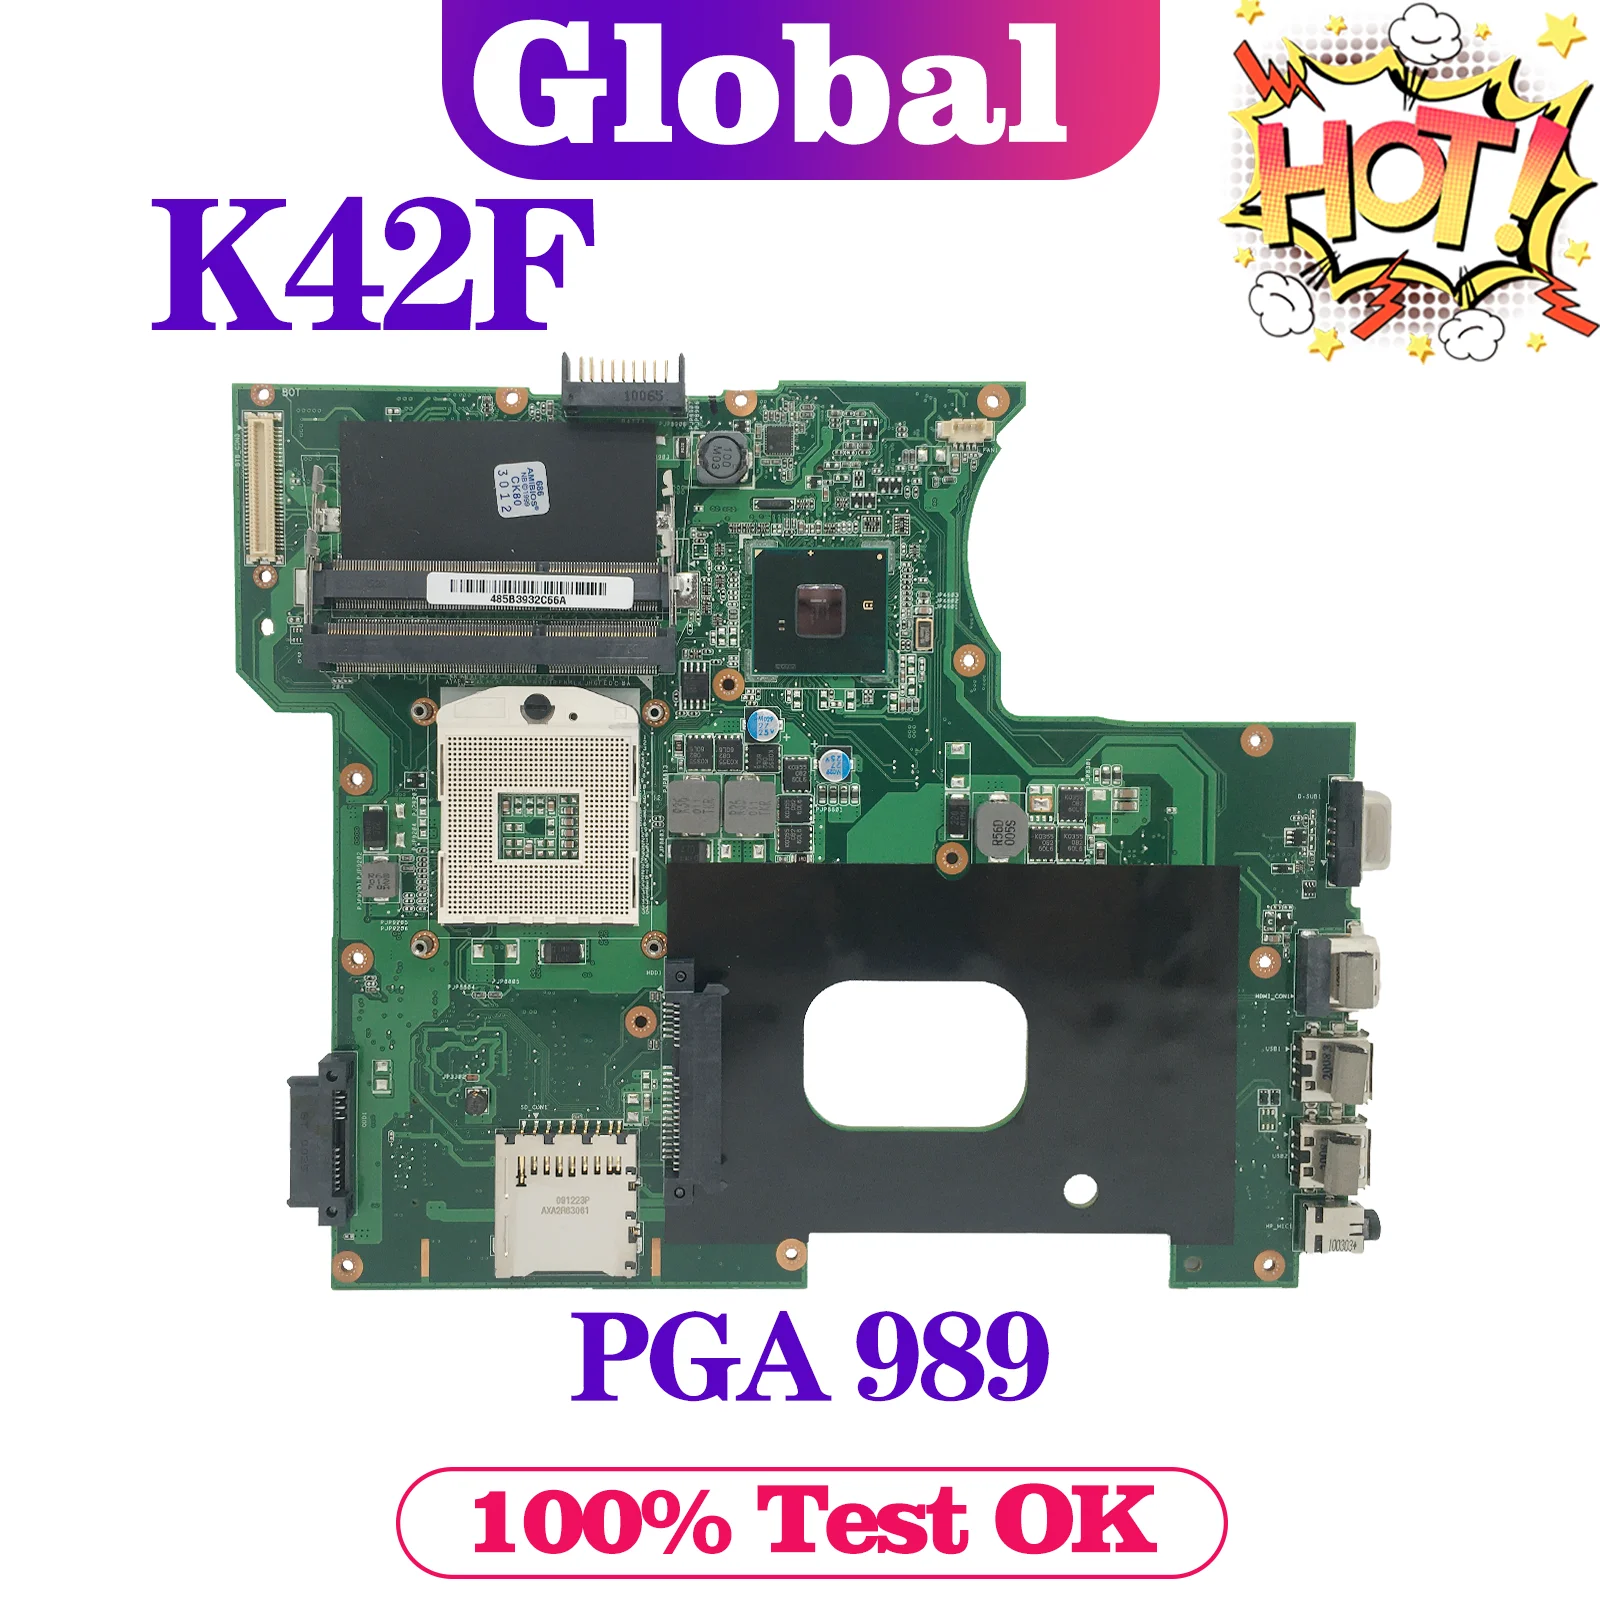 KEFU Notebook K42F Mainboard For ASUS X42F U42F A42F P42F Laptop Motherboard HM55 PGA-989 Main Board 100% Test OK